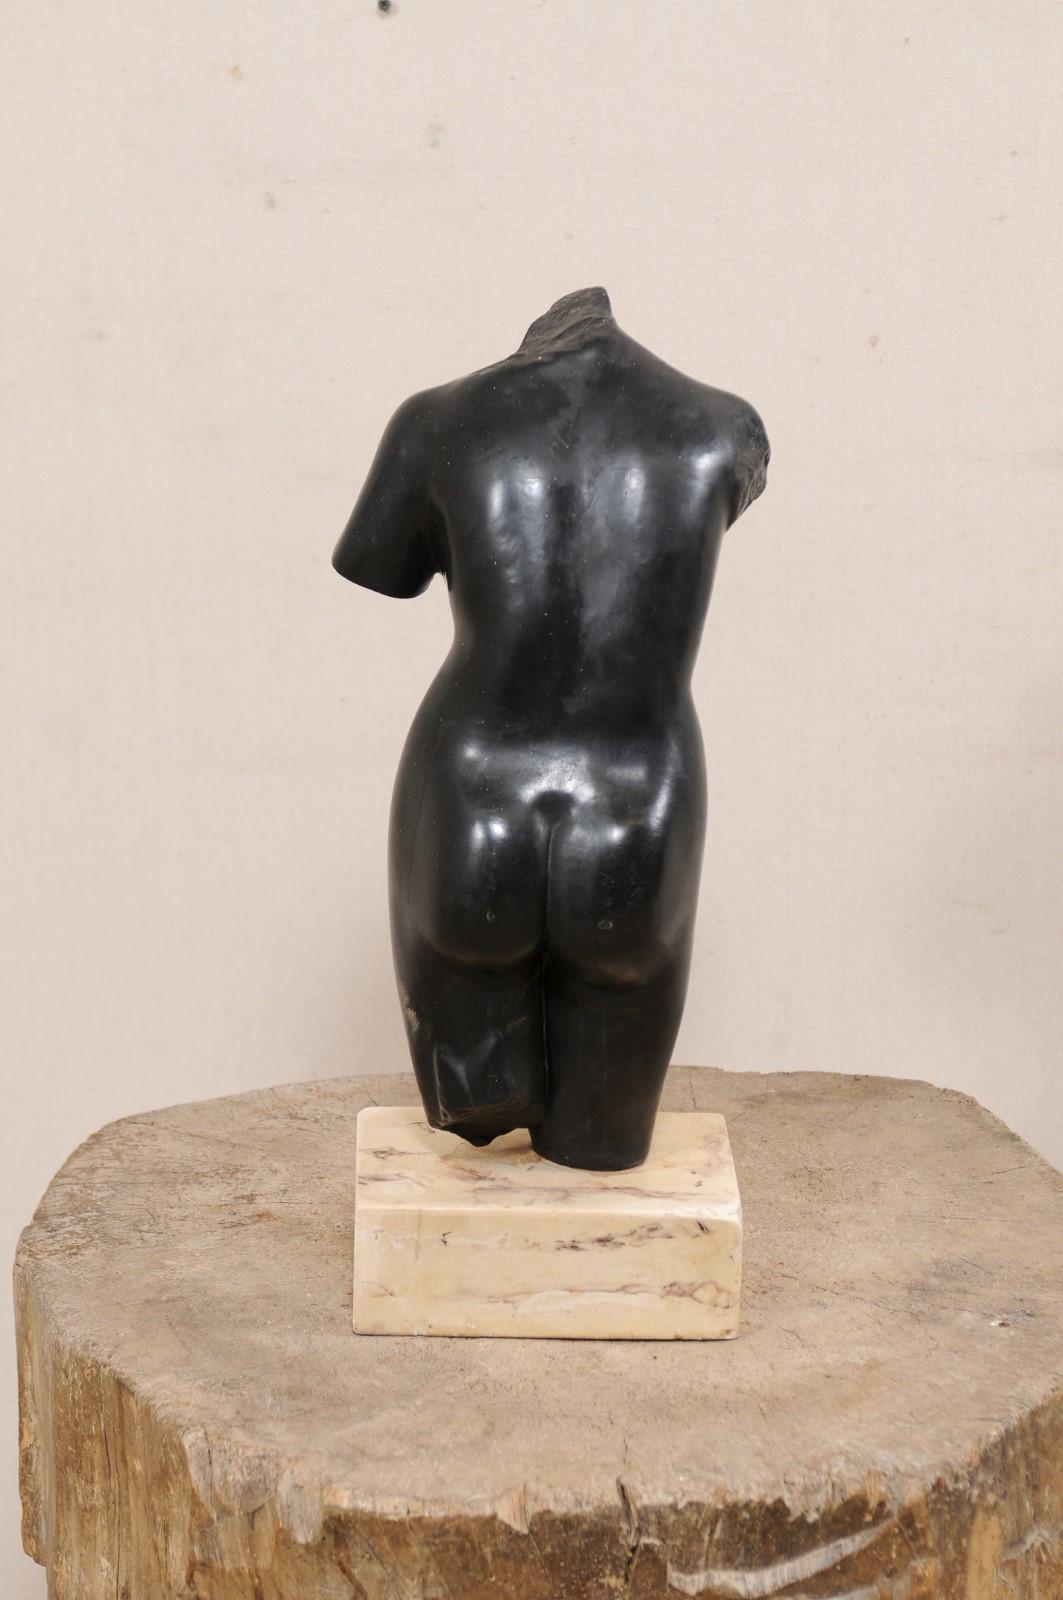 Nude Female Torso Sculptural Art Piece from Europe 1